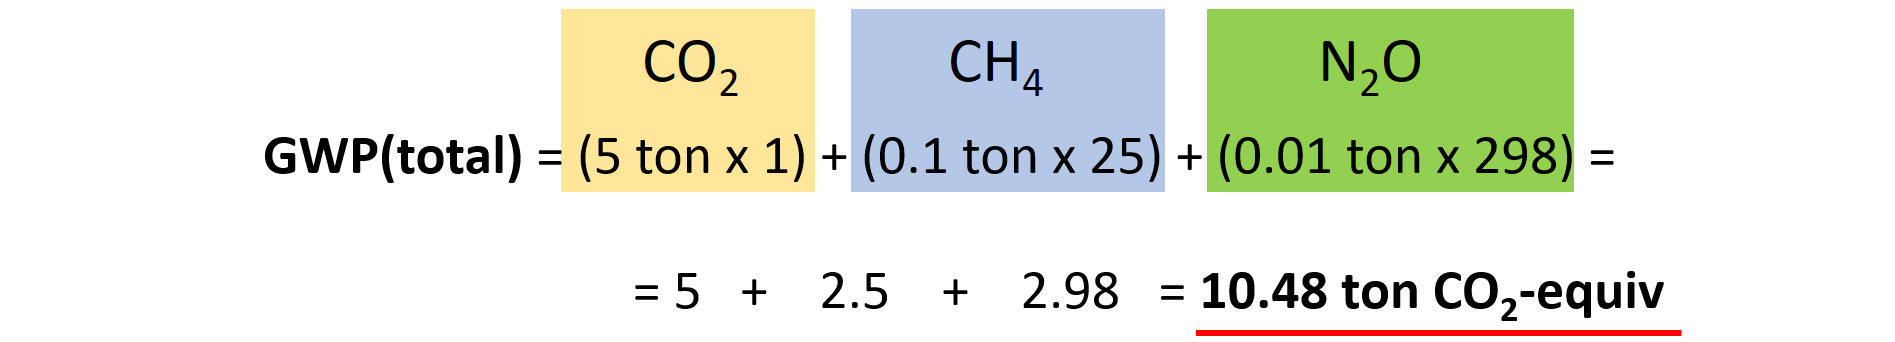 GWP(total)=5 ton x 1 + 0.1 ton x 25 + 0.01 ton x 298 = 10.48 ton CO2-eq